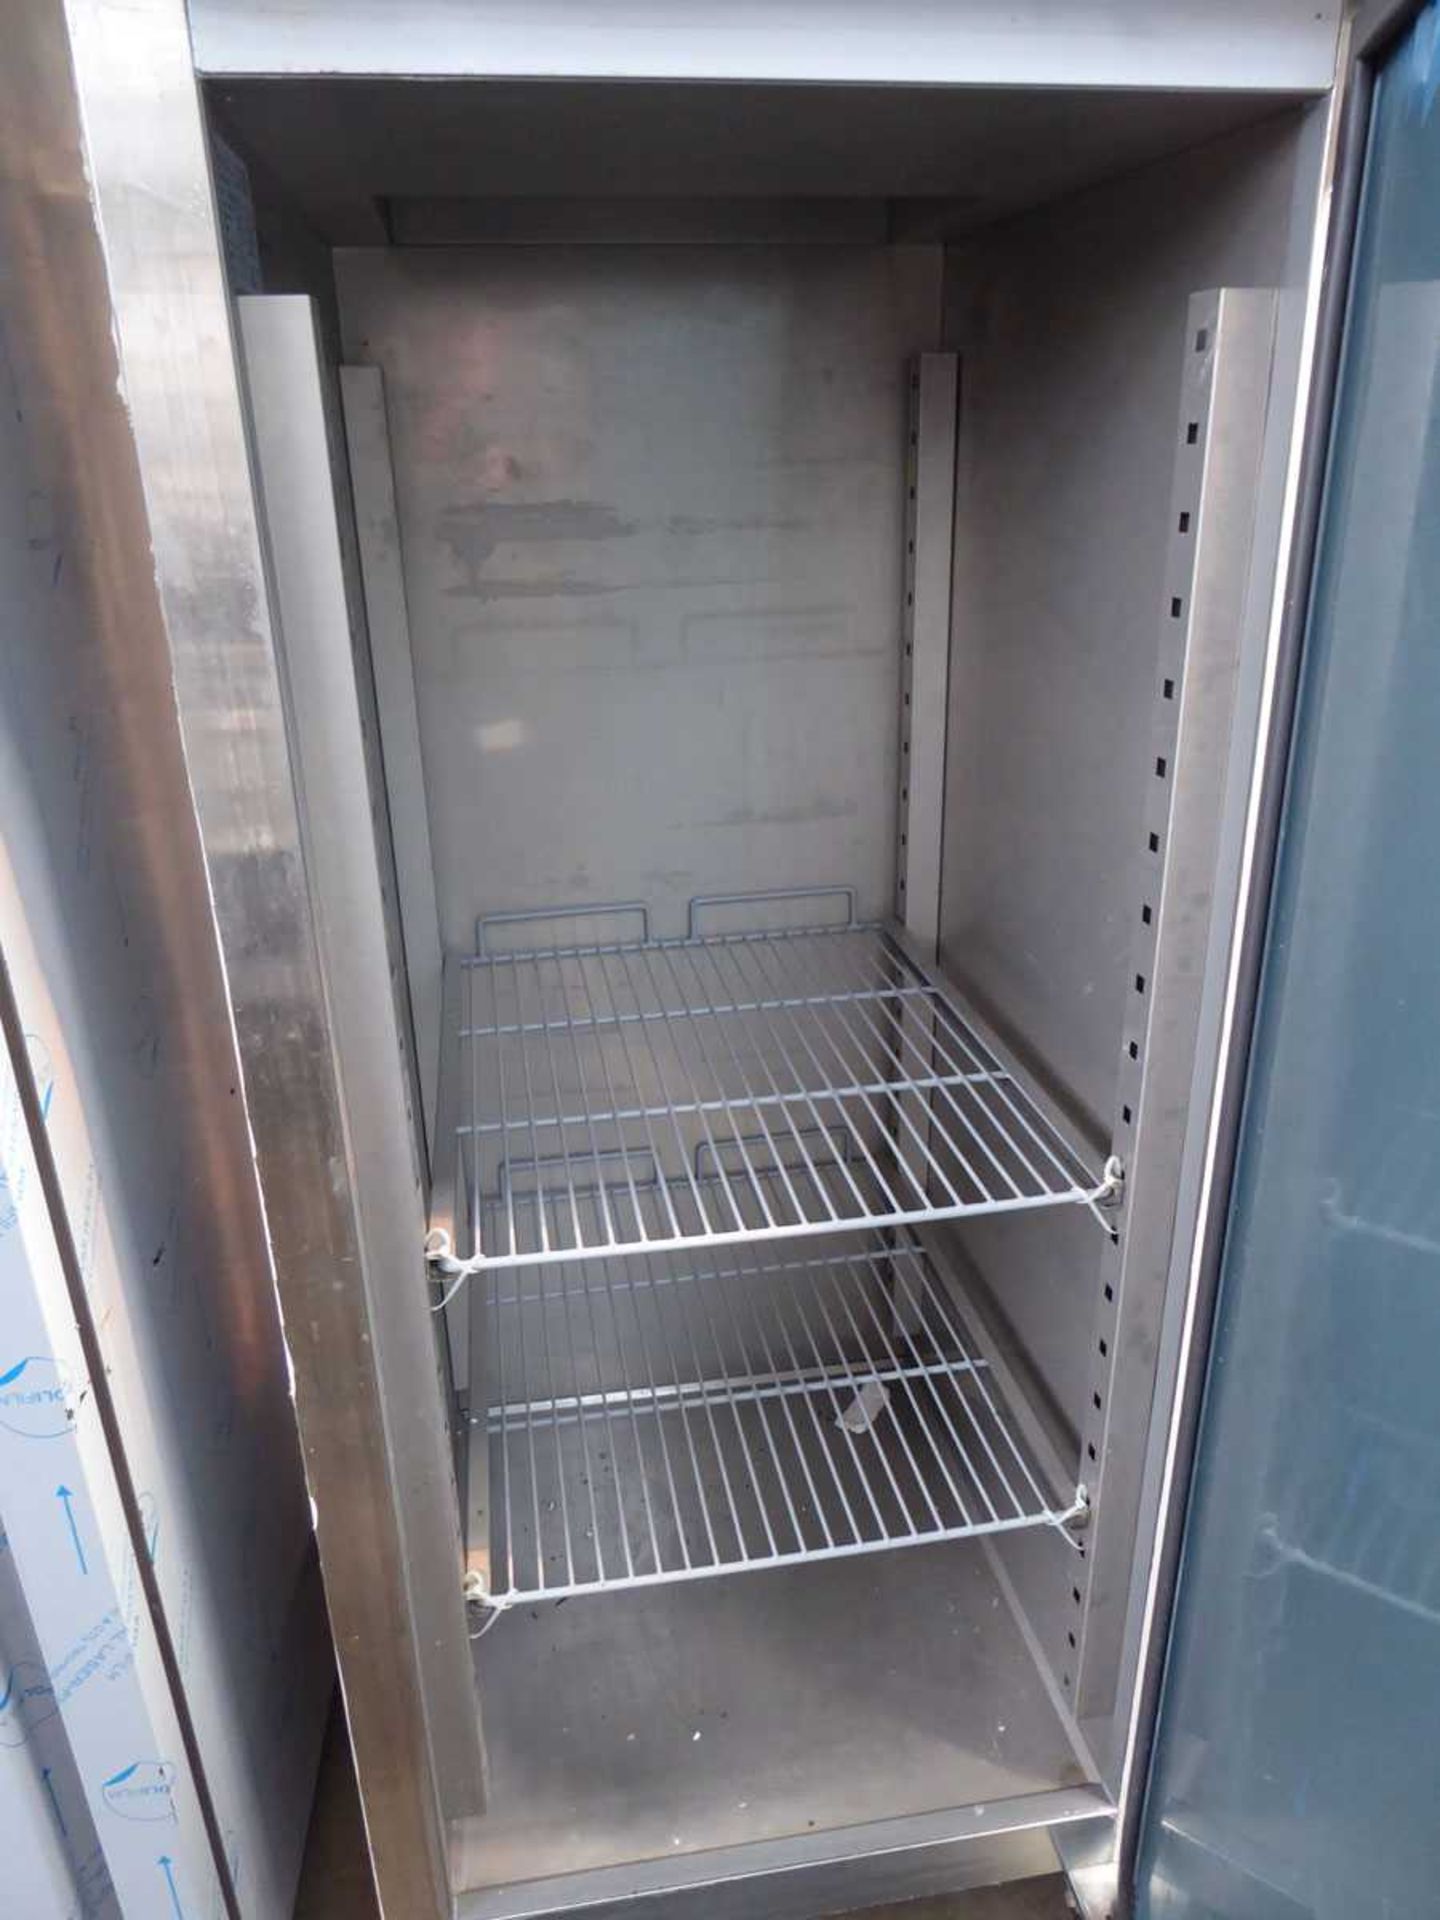 +VAT 74cm Valera model HU07S1-TN single door fridge (US plug) - Image 2 of 2